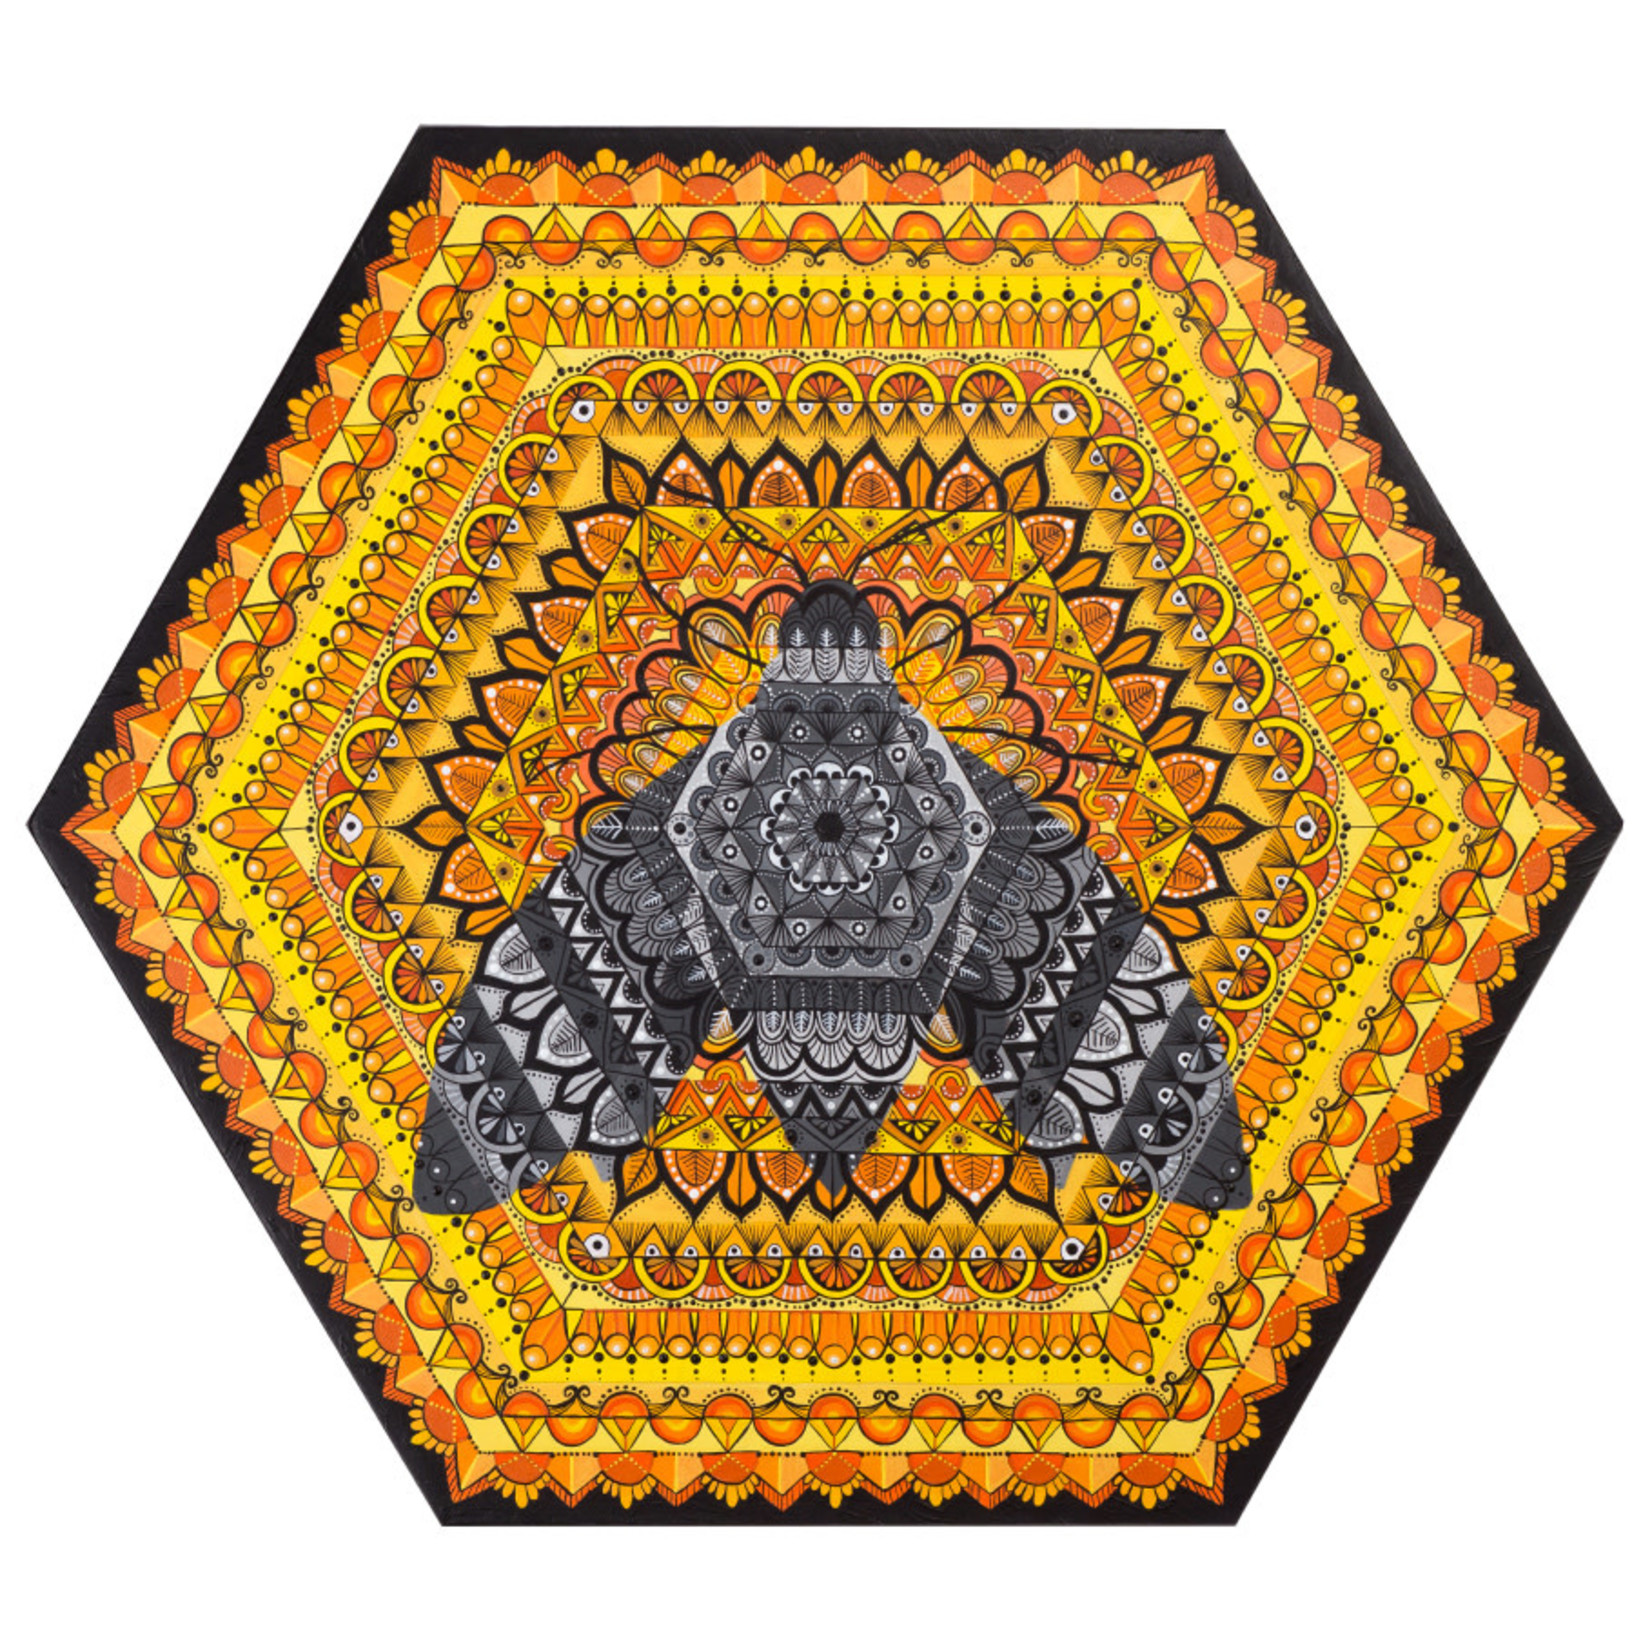 Stirling Studios "Queen Bee" Mandala Canvas Print